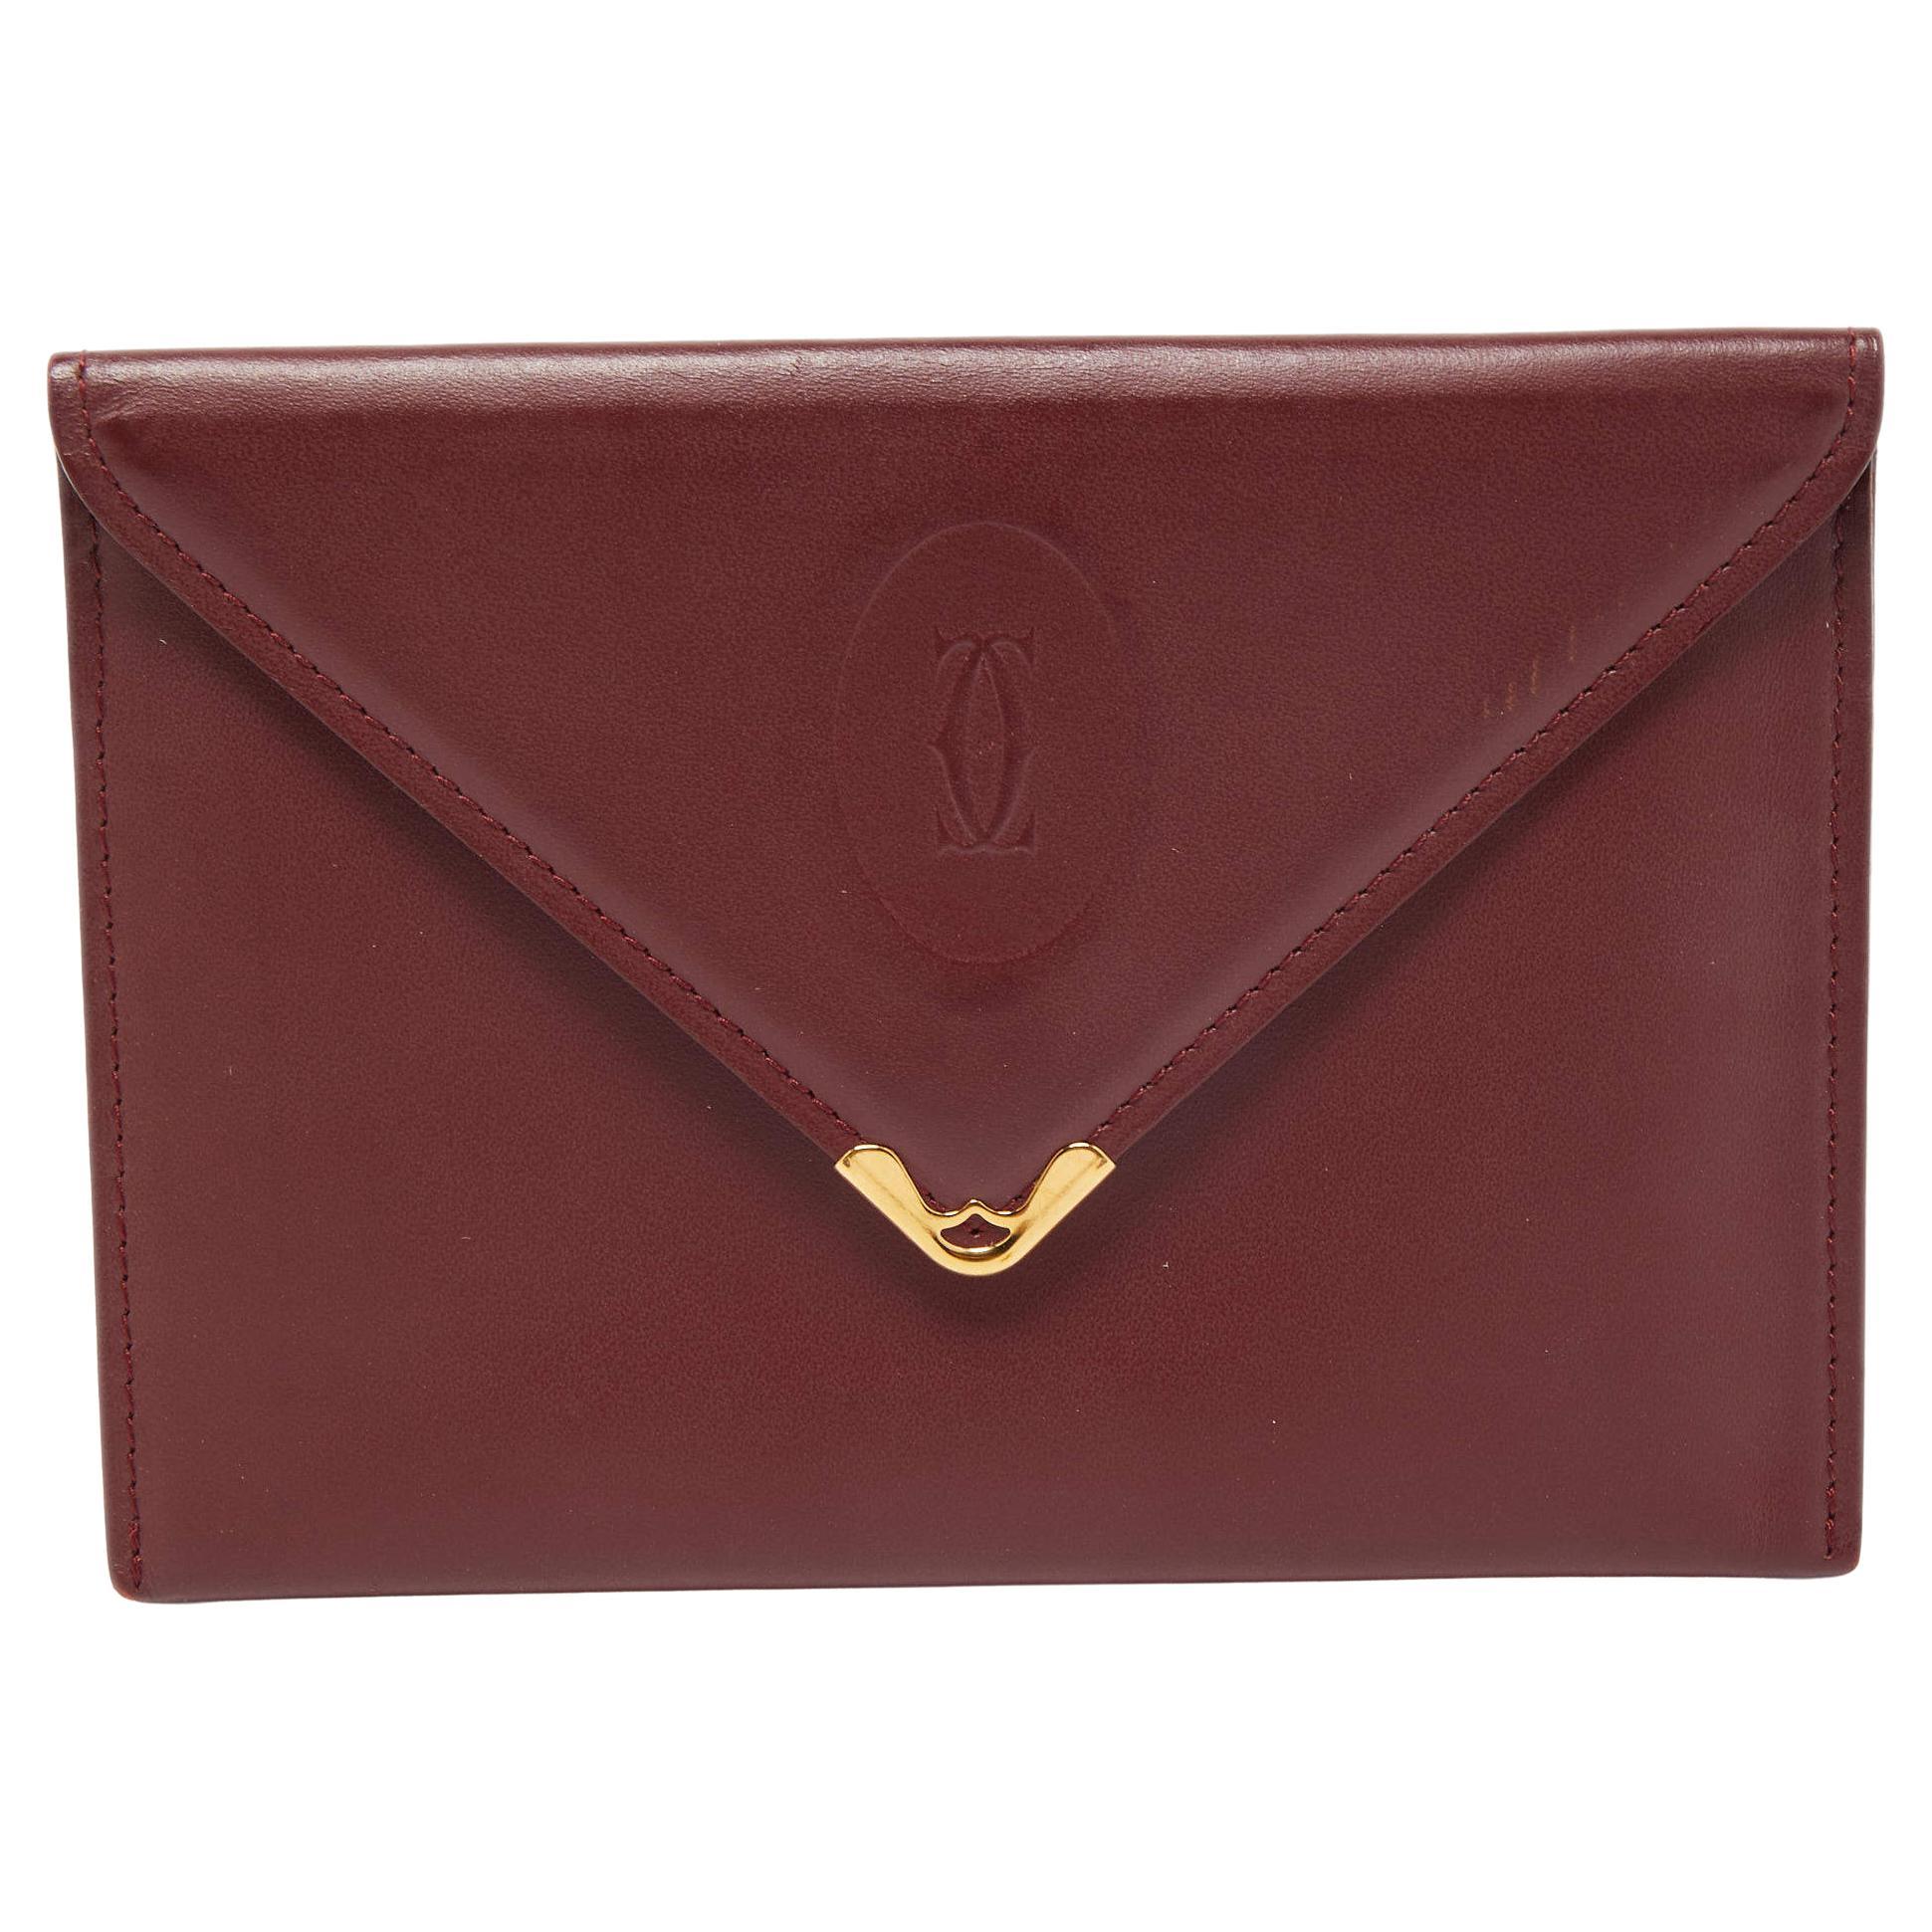 Cartier Burgundy Leather Must de Cartier Envelope Wallet